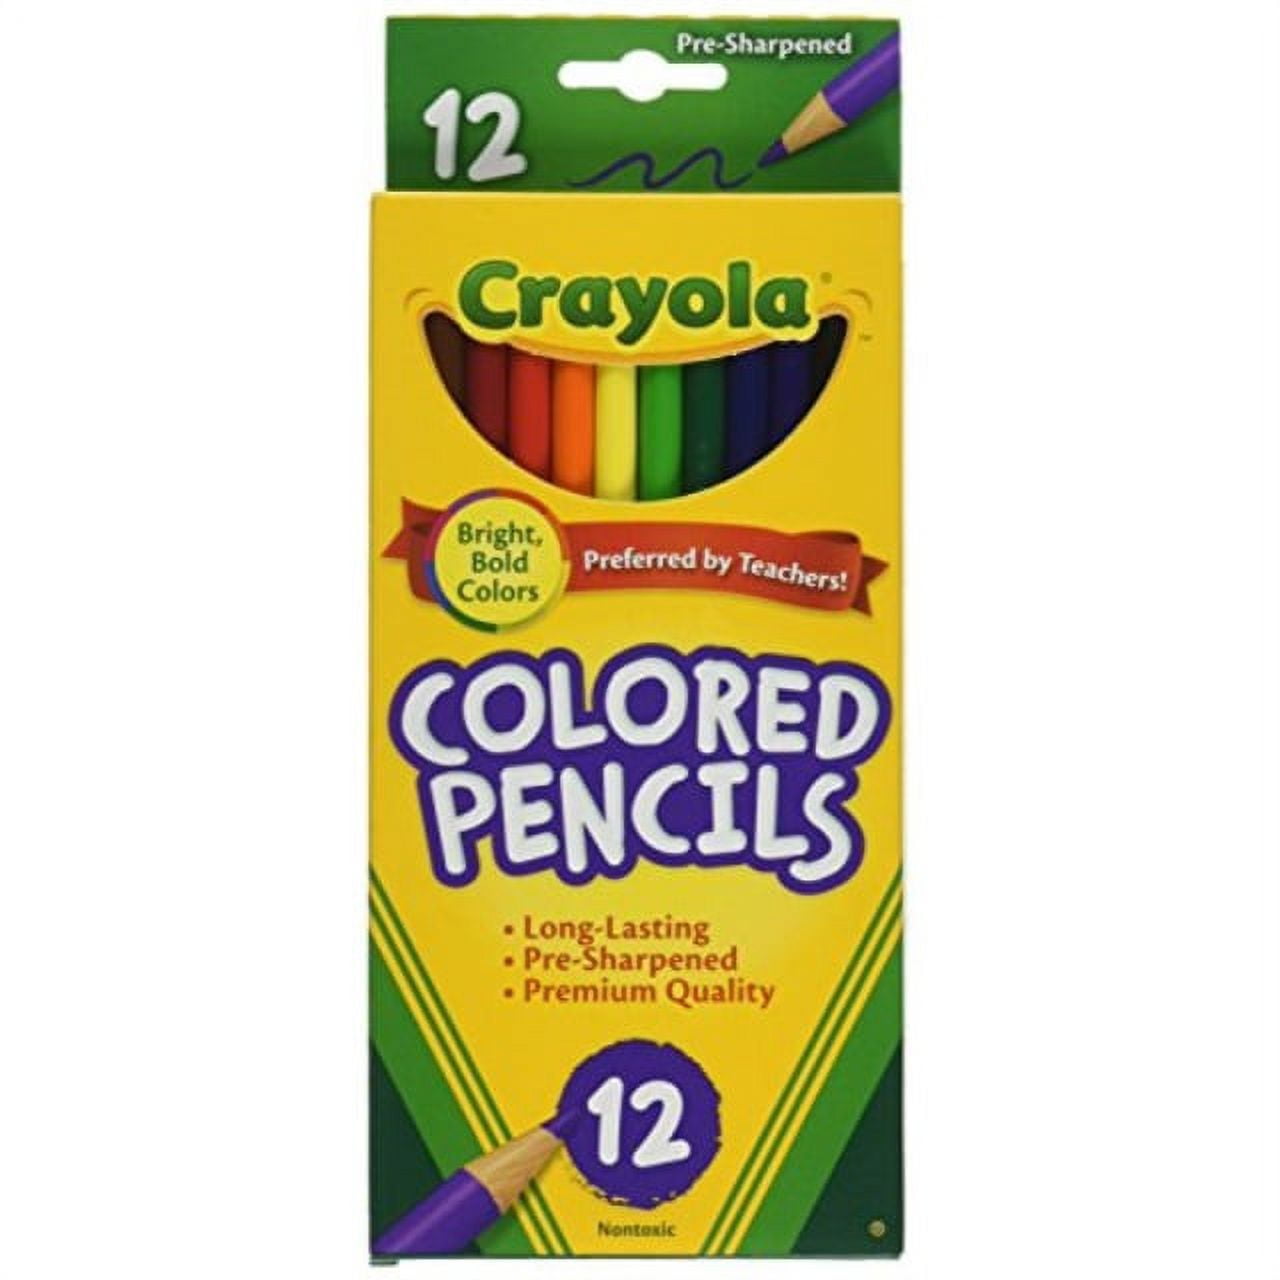 Senjay Wooden Colored Pencils,Mini Colored Pencils,Professional Drawing  Colored Pencils Set Children's Durable Wooden Mini Colorful Pencils 